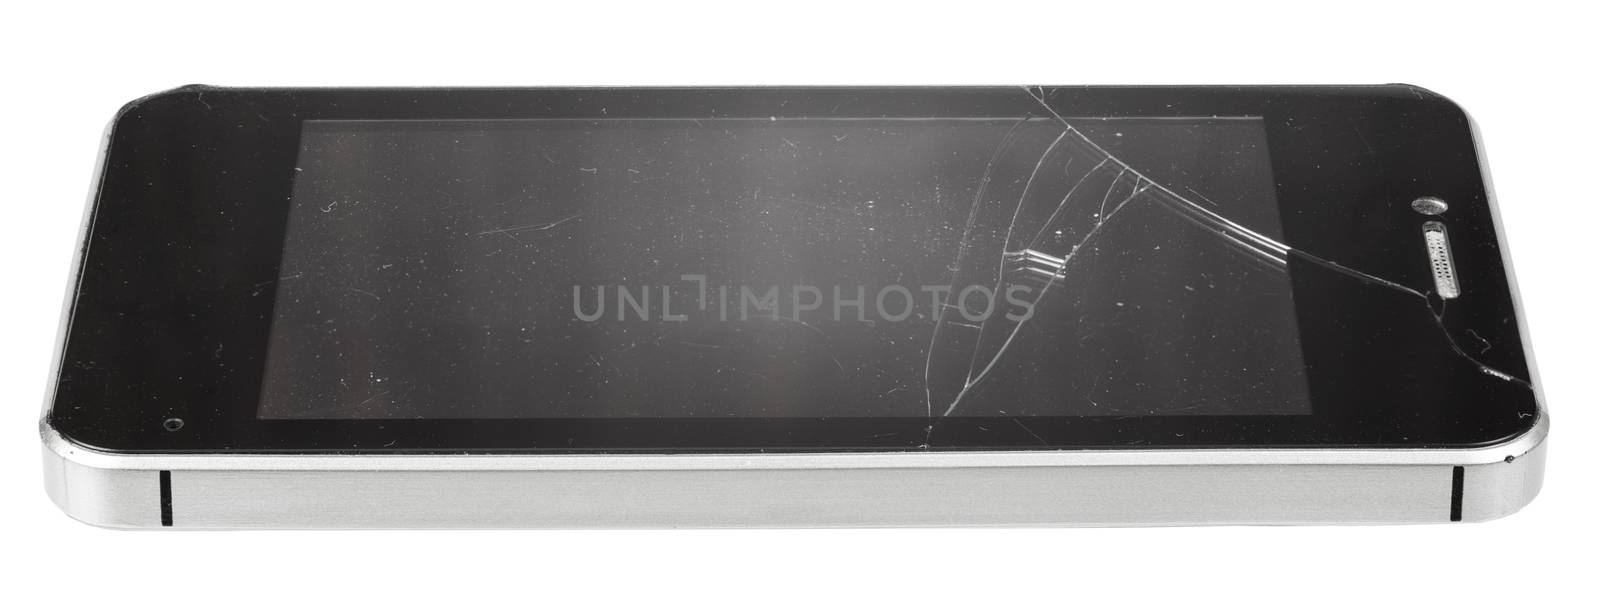 Black broken smartphone on isolated white background